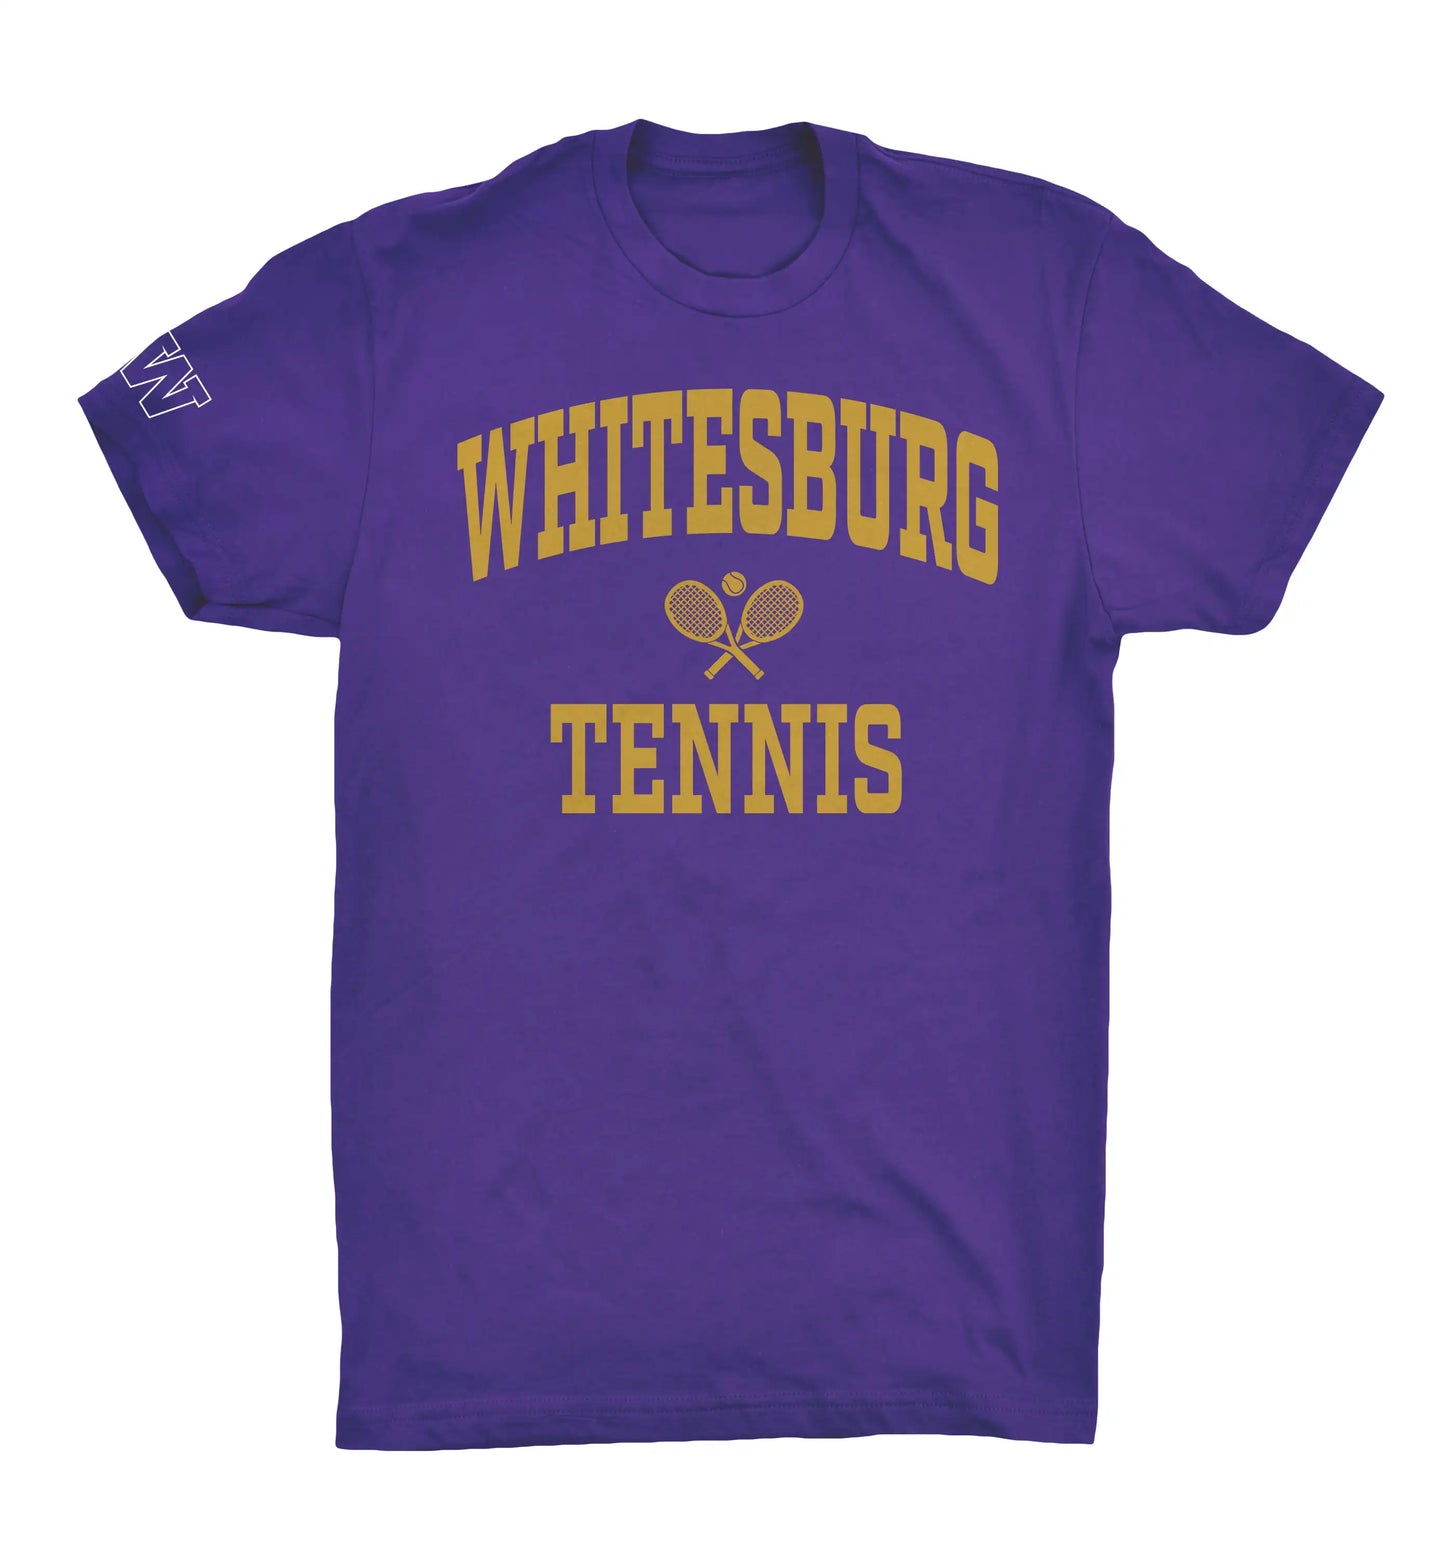 TENNIS - Collegiate Letters Tshirt